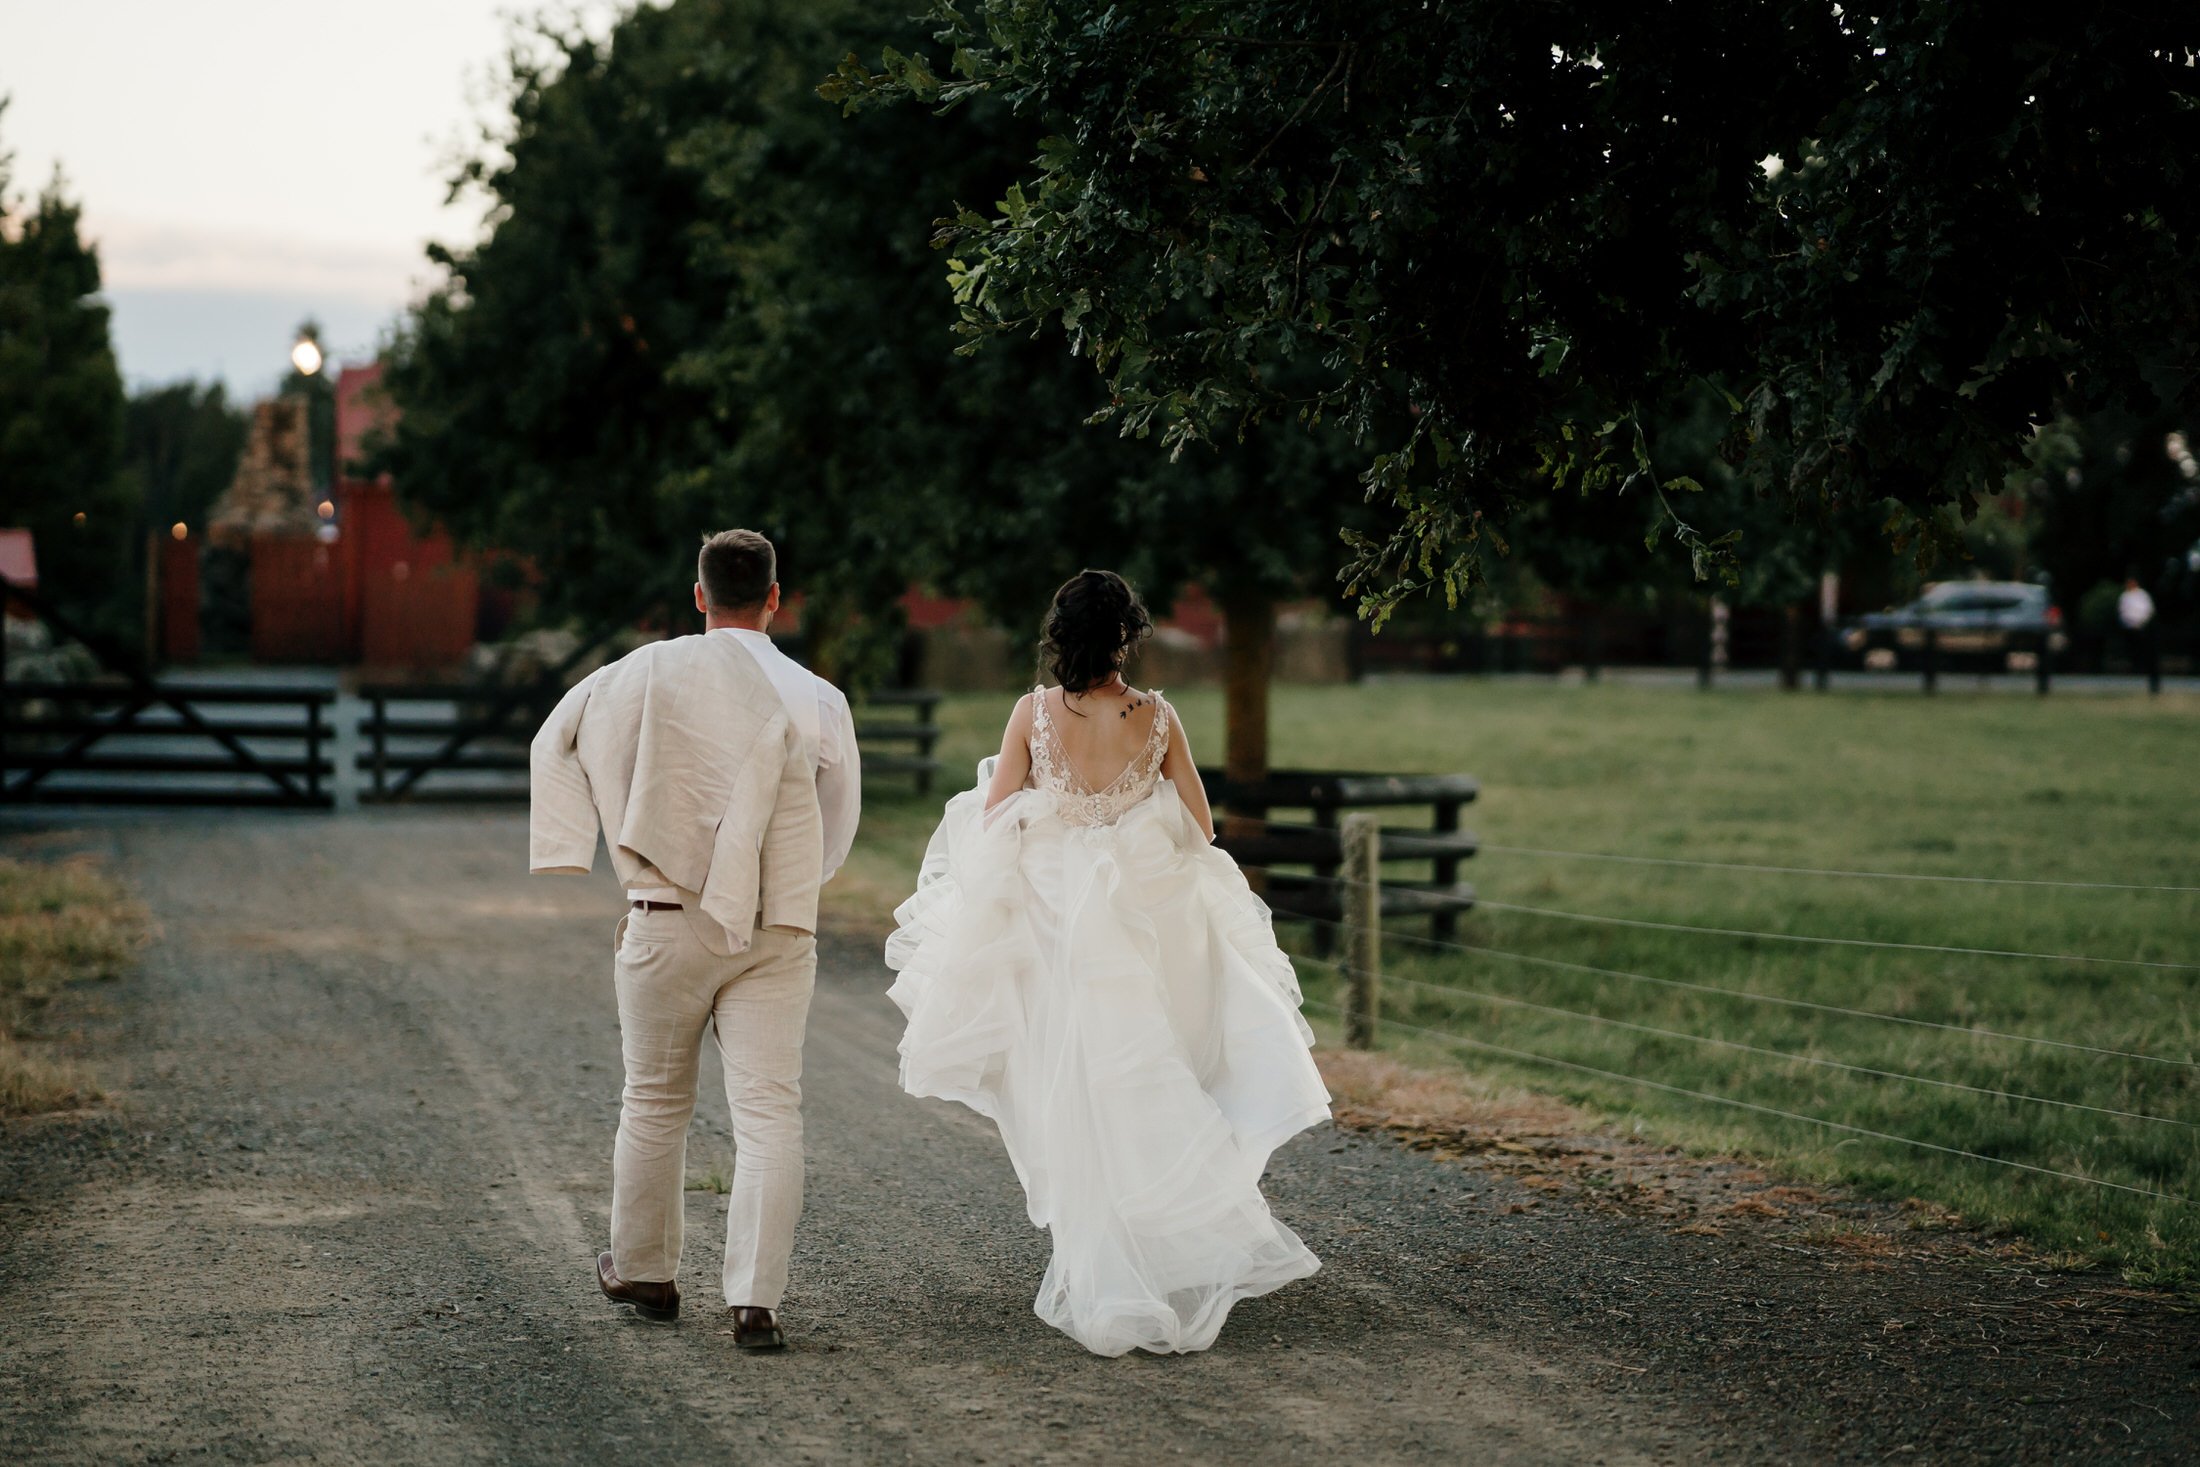 Astral-bridal-wedding-gown-photographer-auckland-videographer-farm-rustic (10).jpg